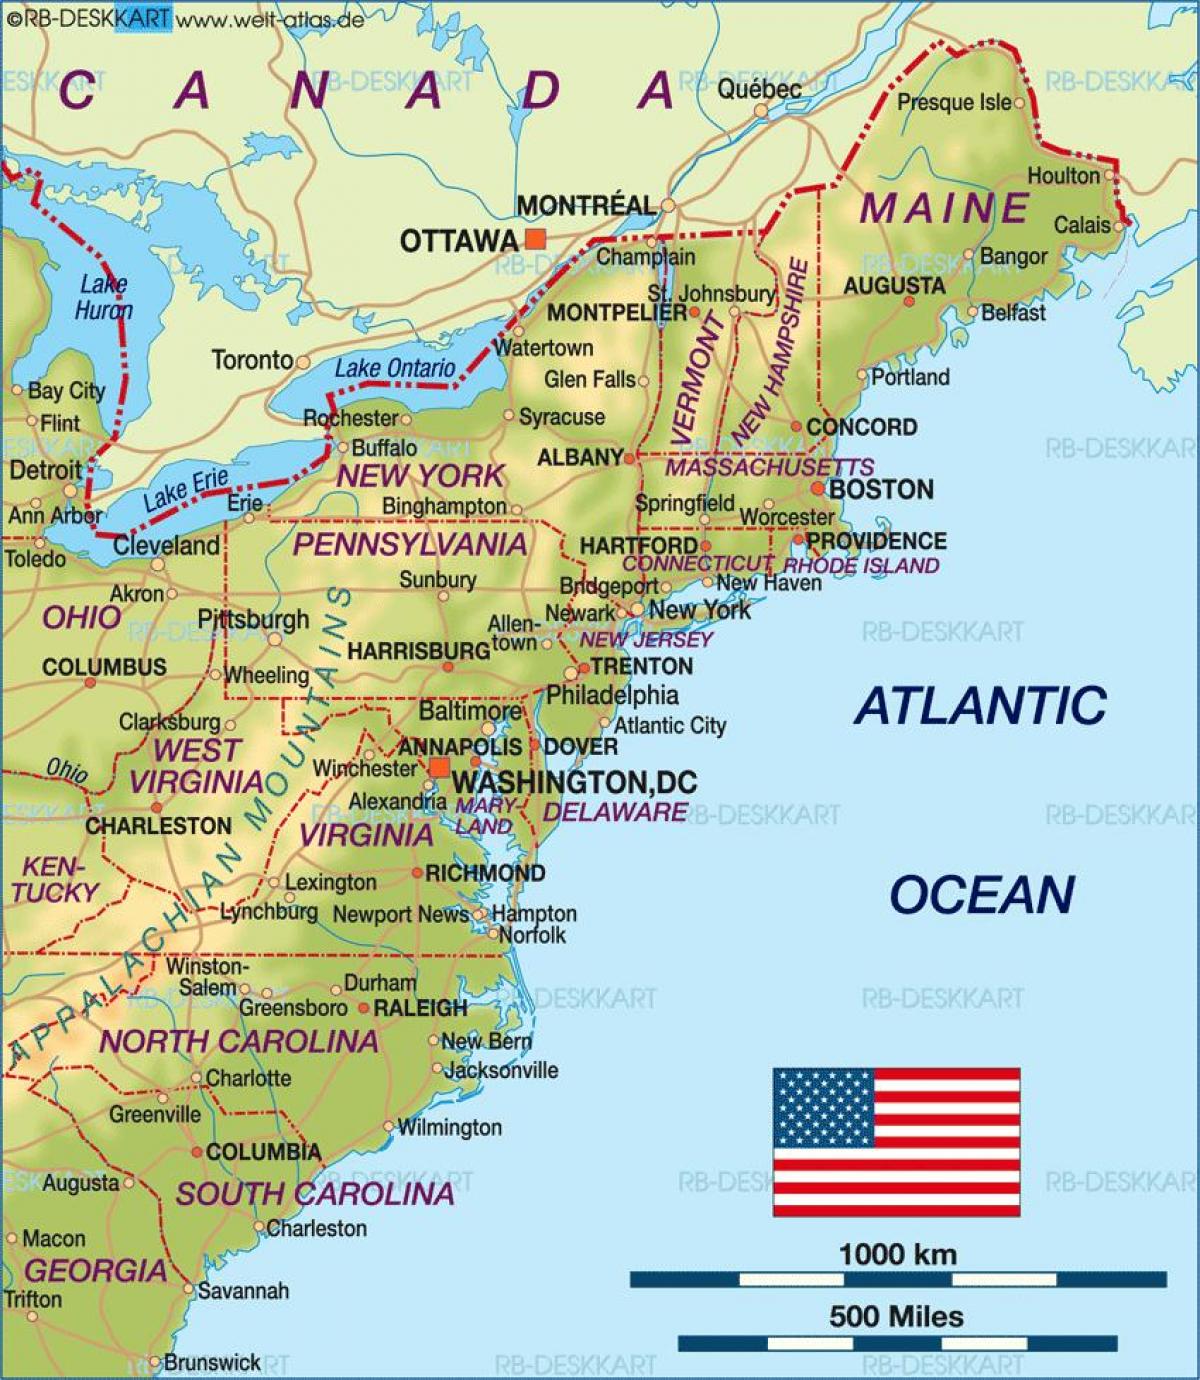 Boston ჩვენს რუკაზე